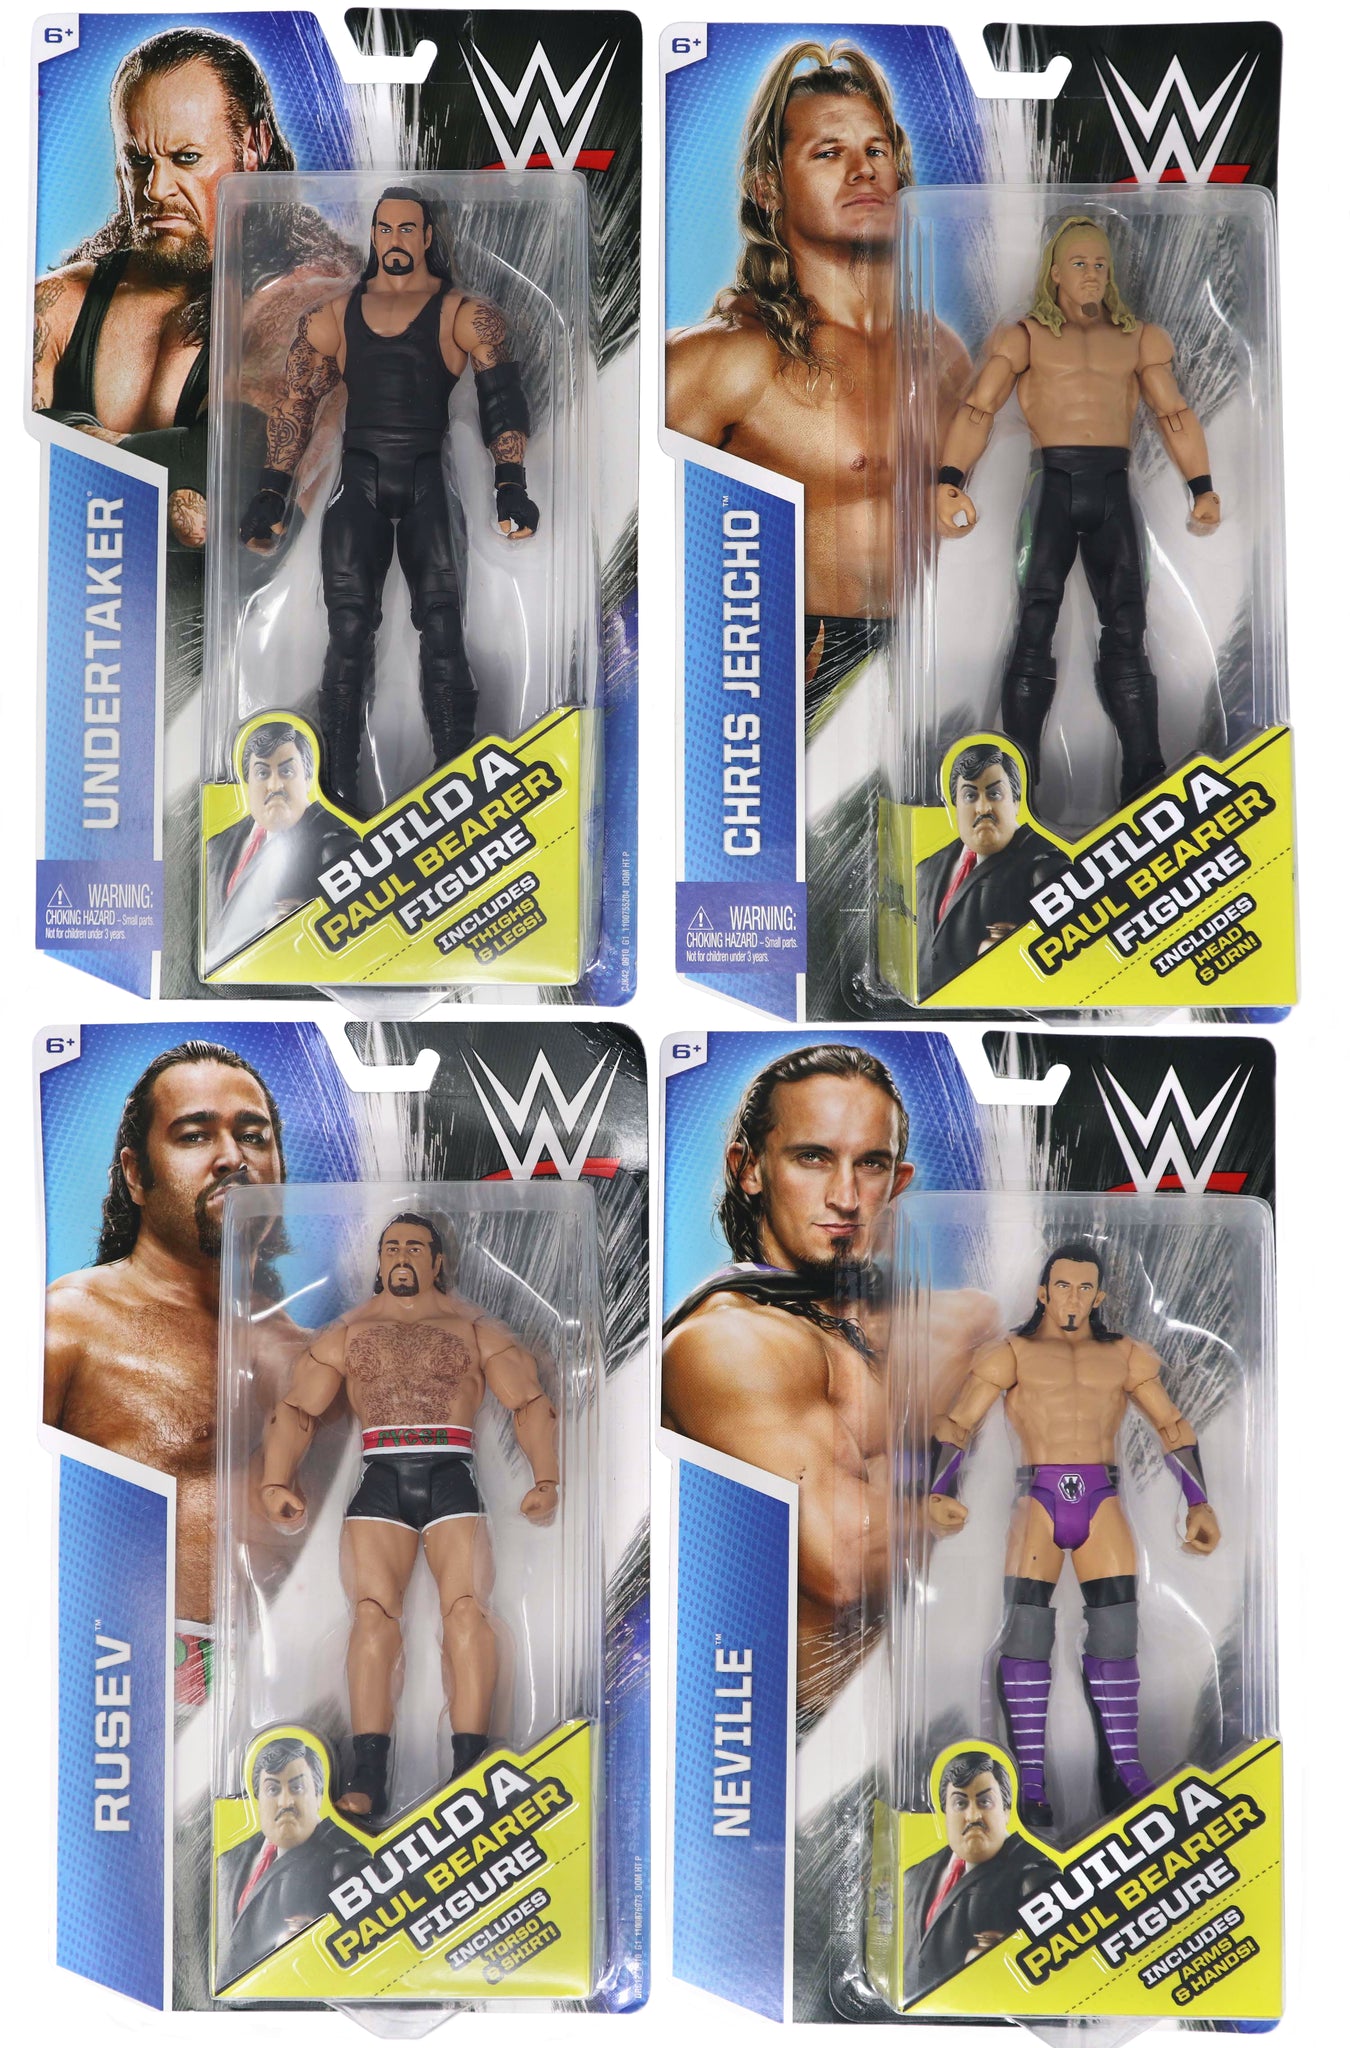 Lot of 12 WWE Wrestling Wrestler Miniature WWE Action Figures T3